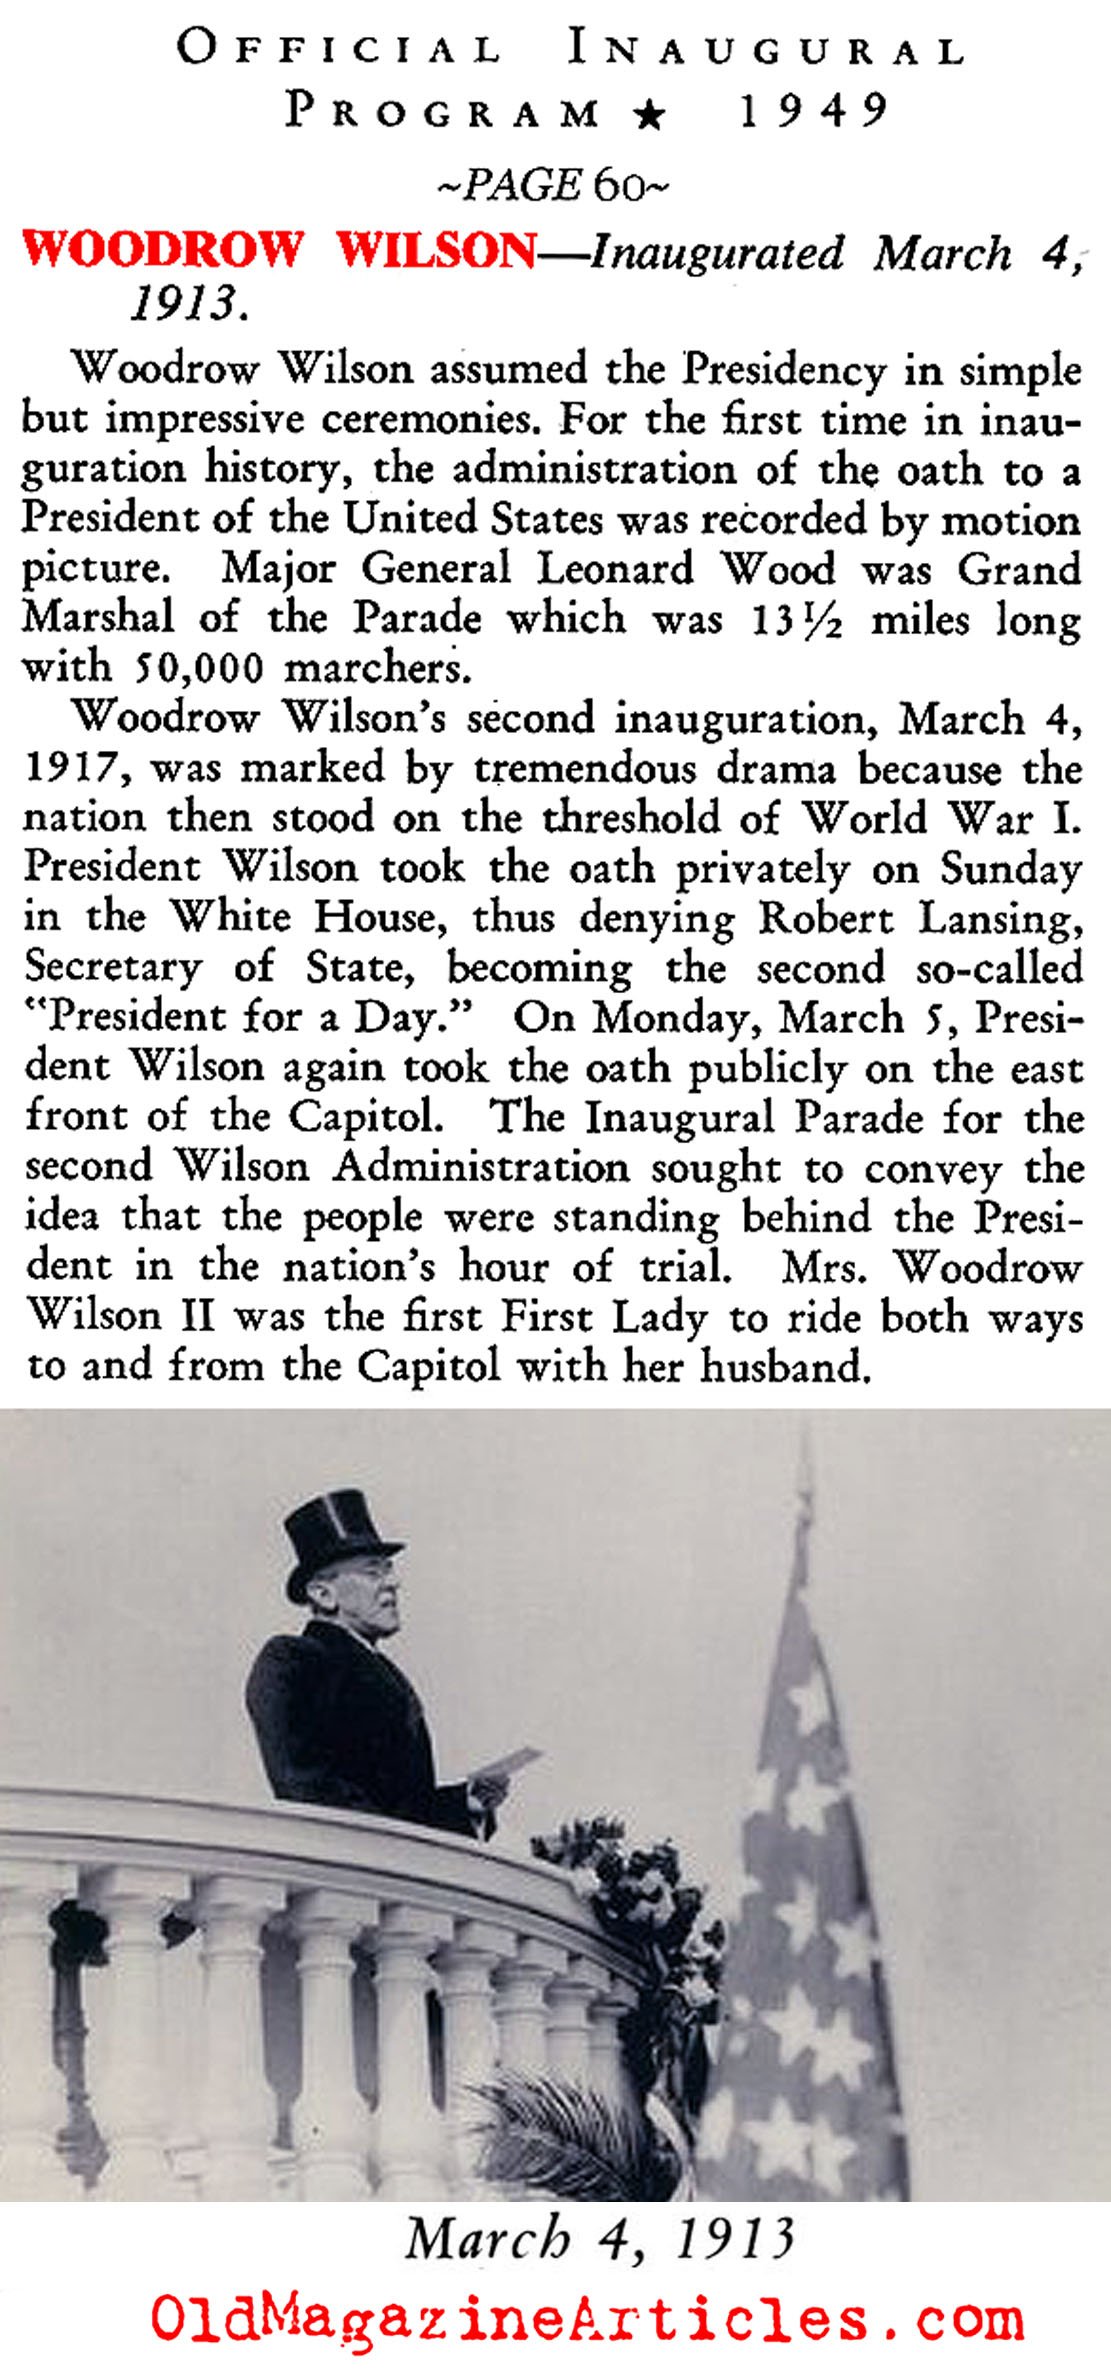 The Inaugurals of Woodrow Wilson (Inaugural Program, 1949)